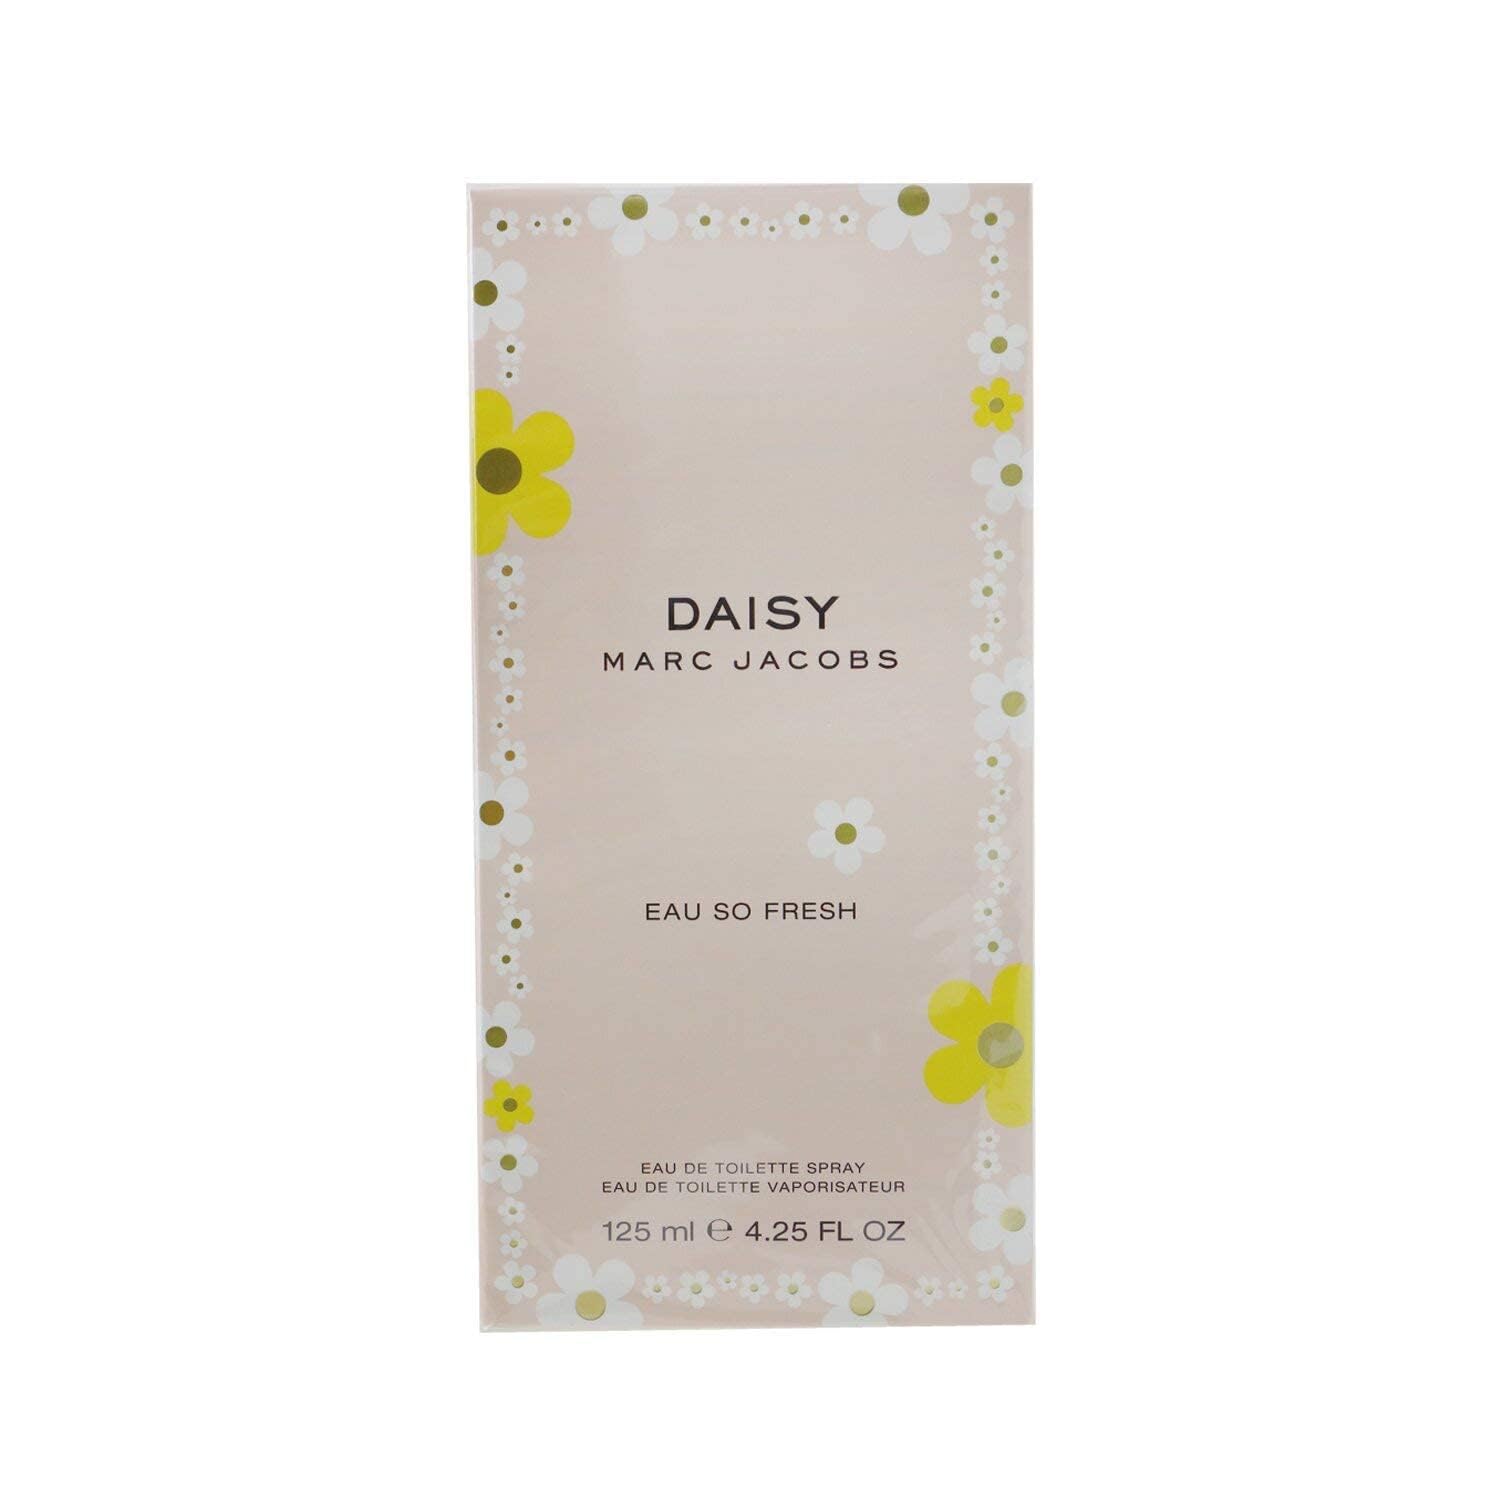 Marc Jacobs Daisy Eau So Fresh Eau de Toilette Spray-125ml/4.25 oz.